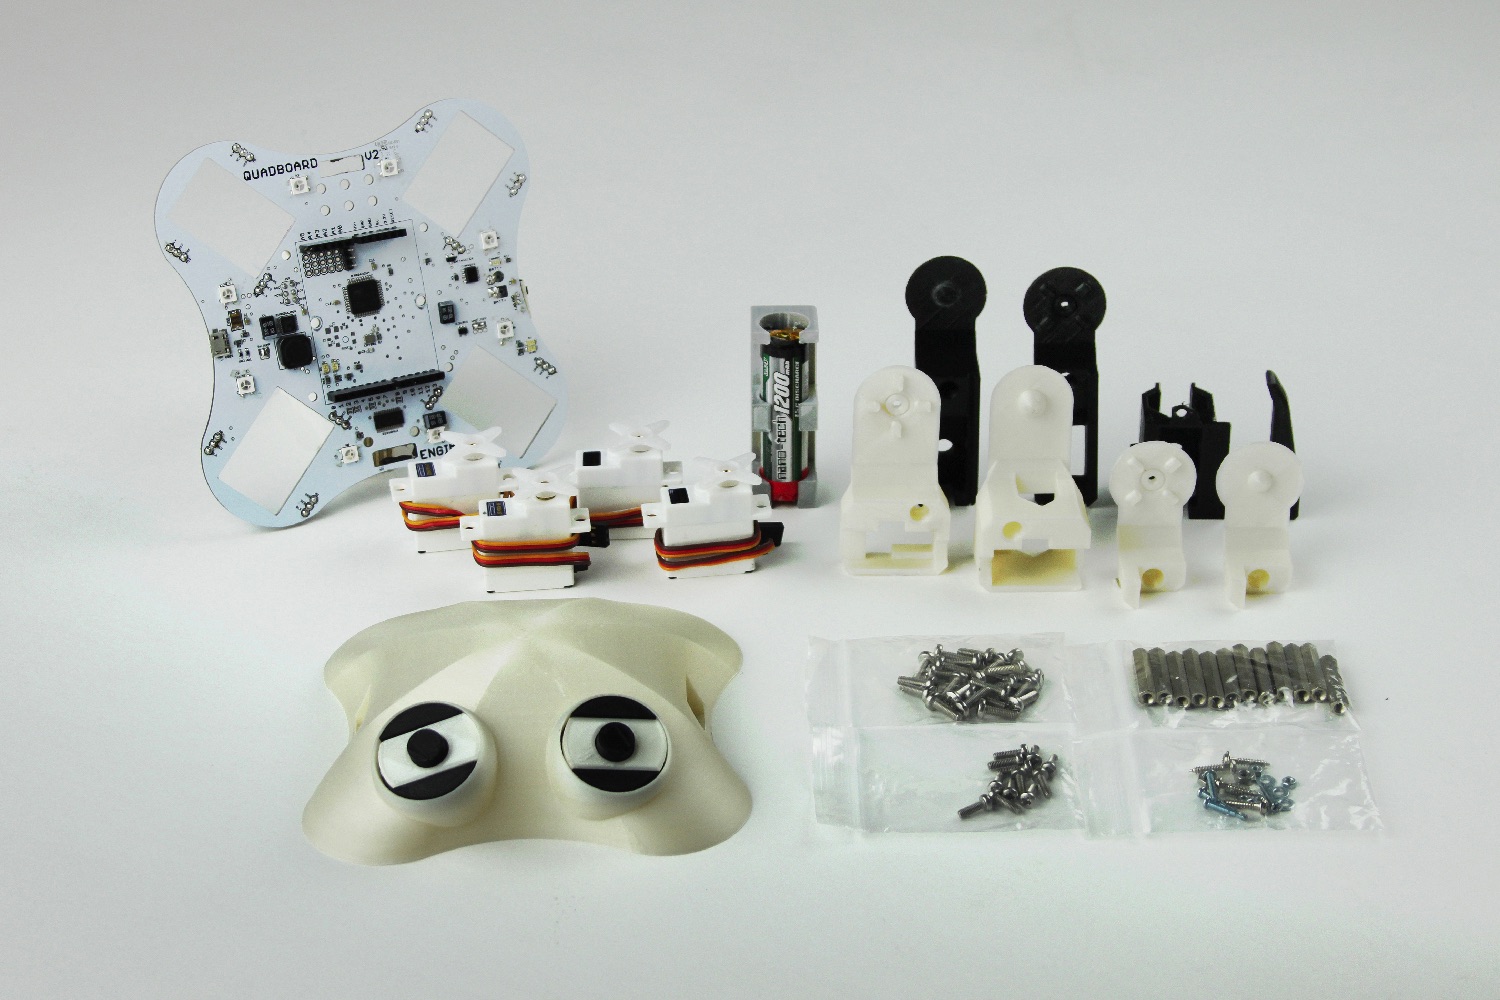 quadbot robot kickstarter img 8705 1